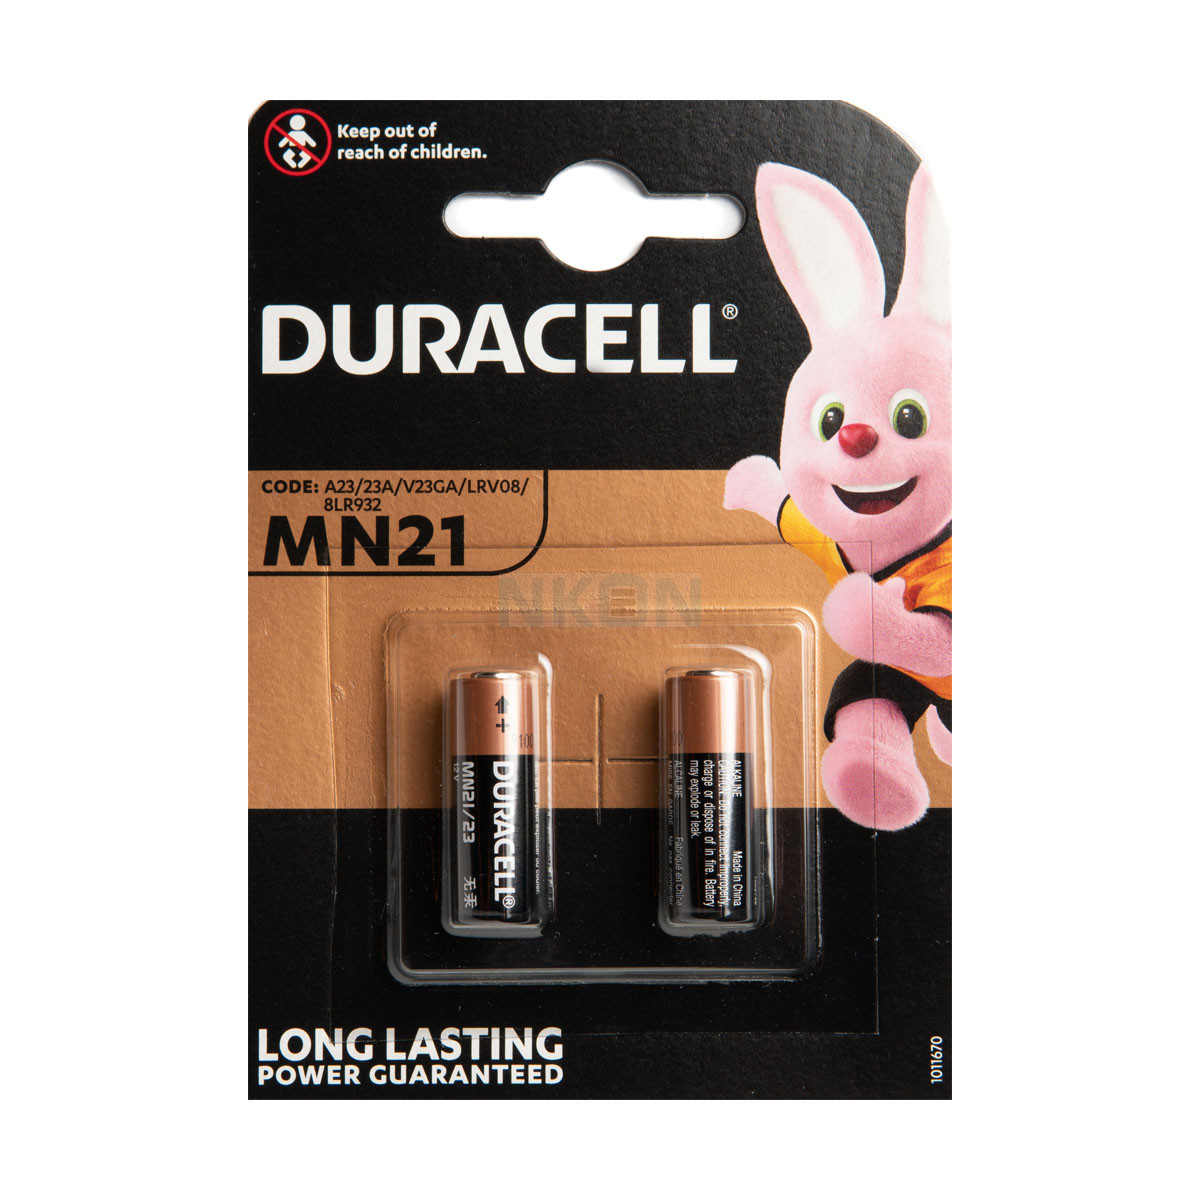 2x MN21 (A23 / V23GA / 3LR50) Duracell - 12V - Pilas desechables